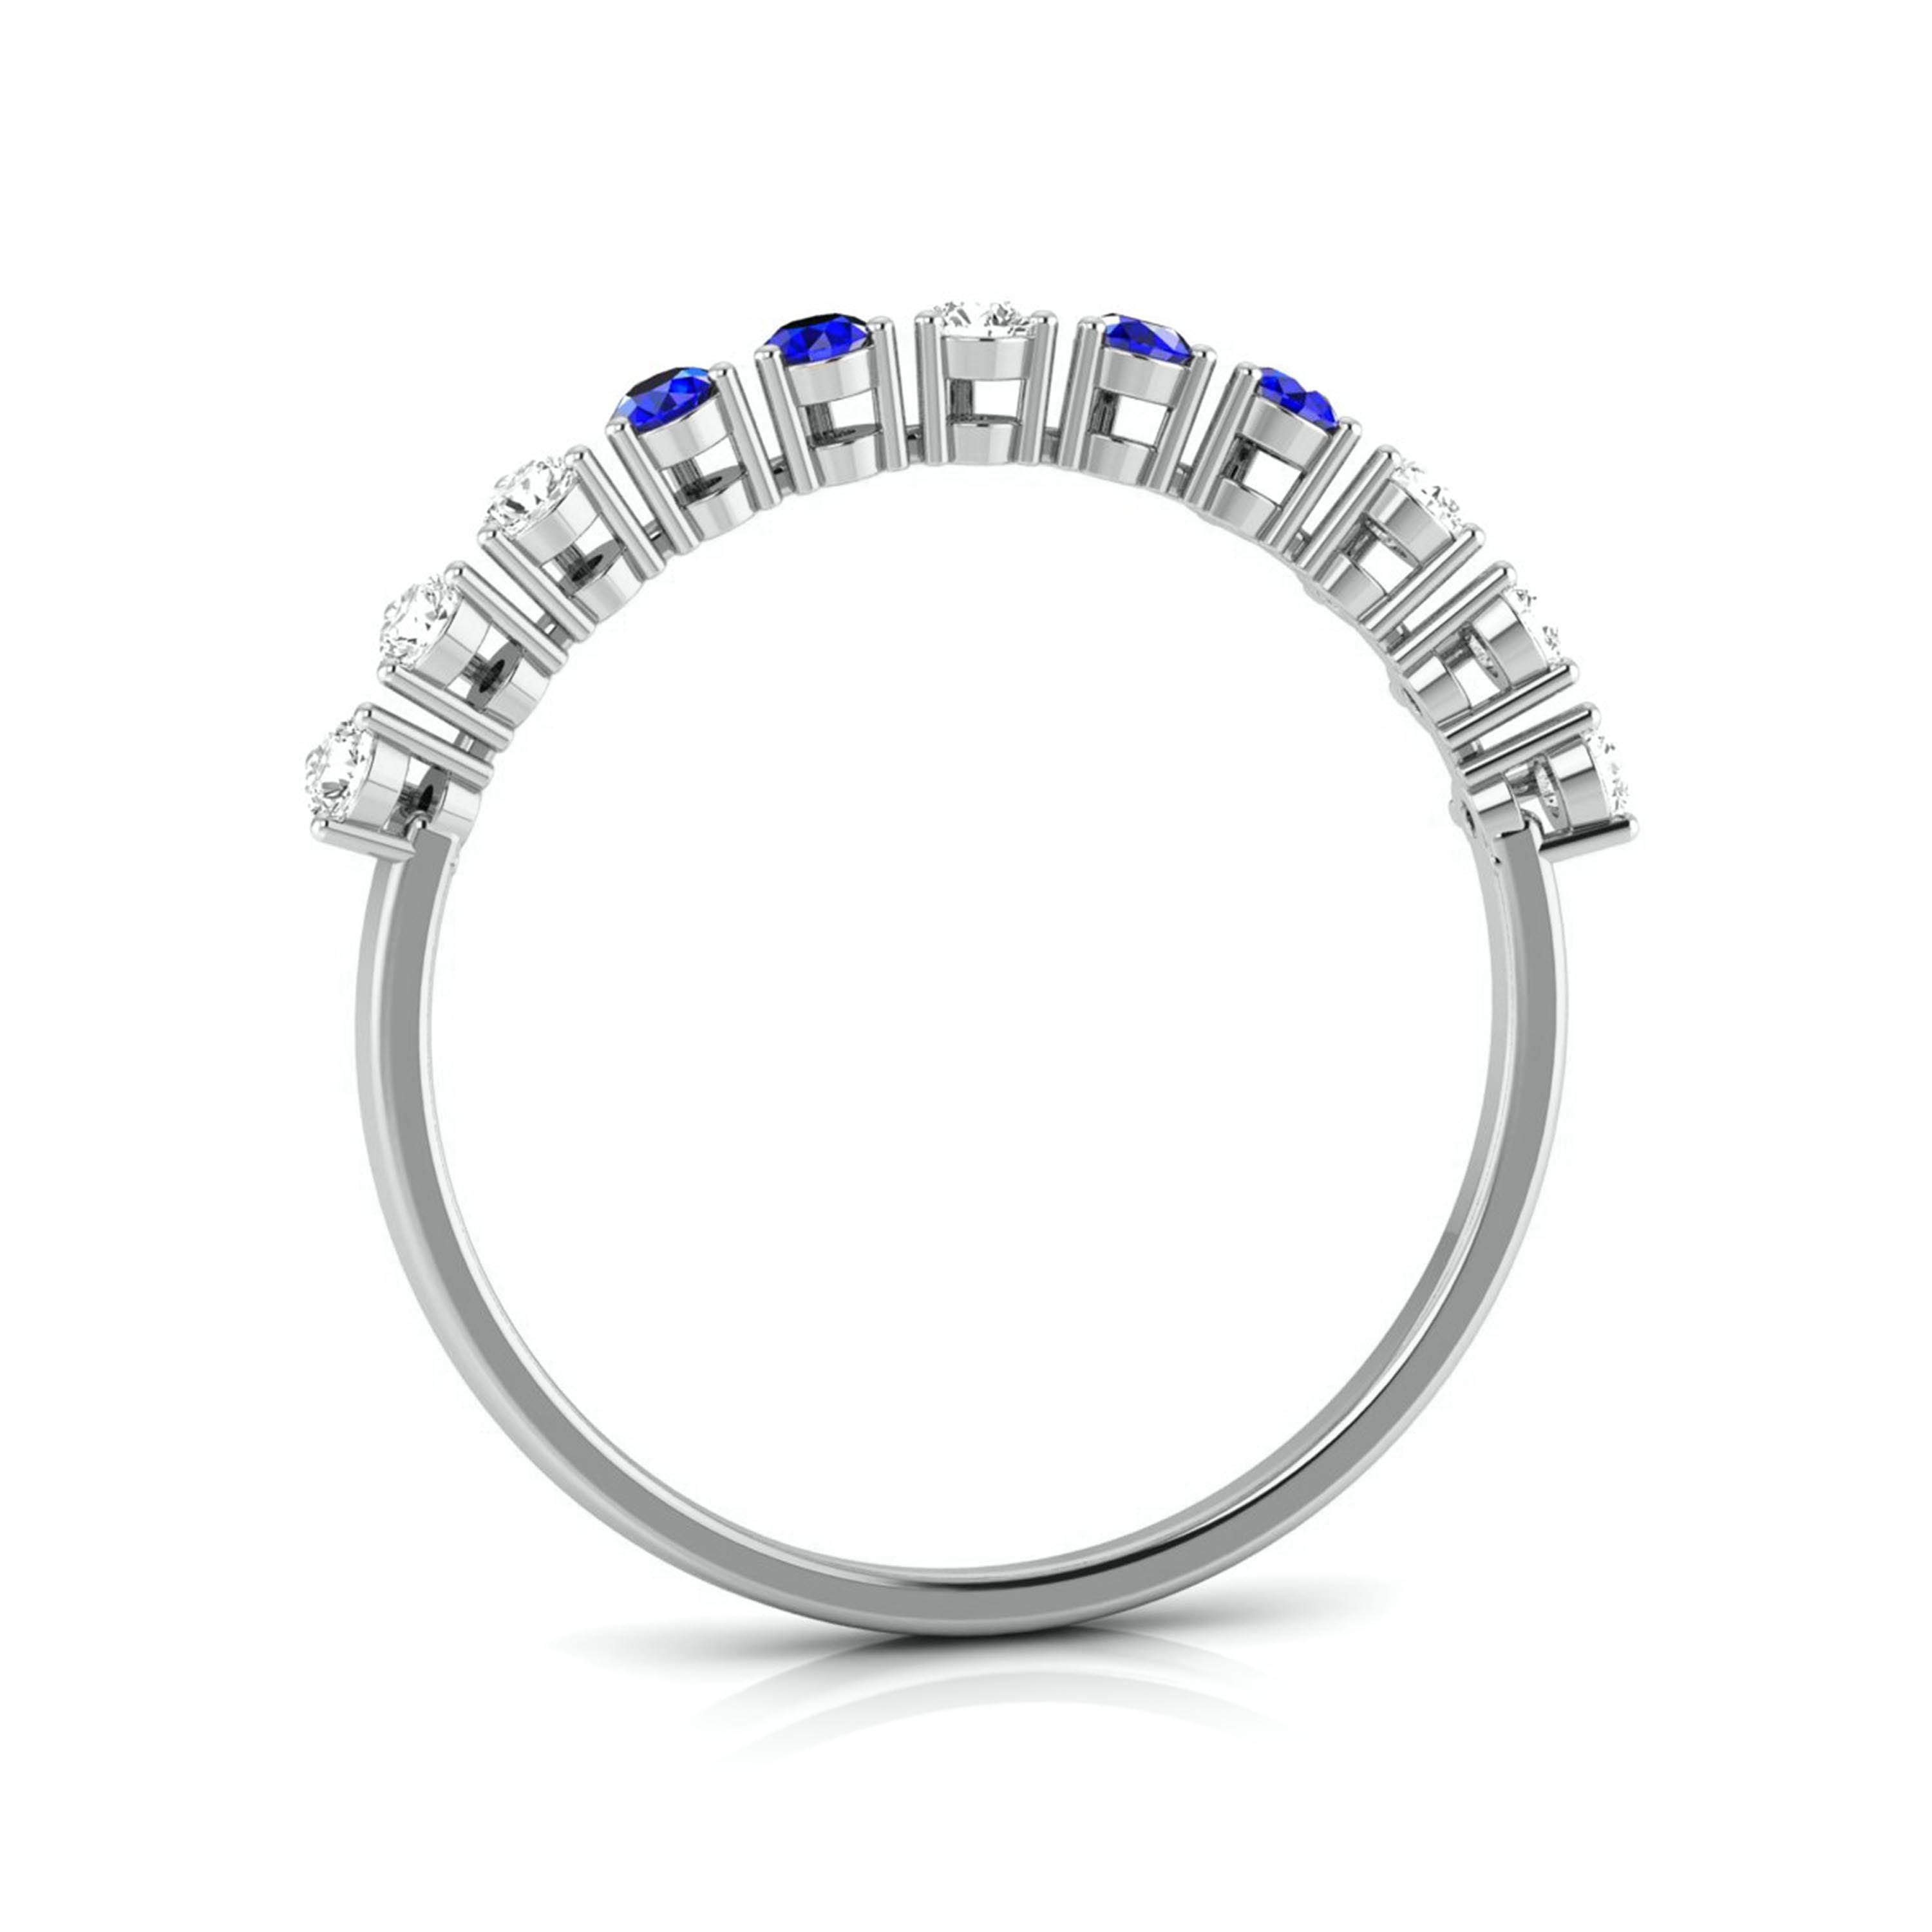 Blue Sapphire Platinum Diamond Engagement Ring JL PT LR 7007